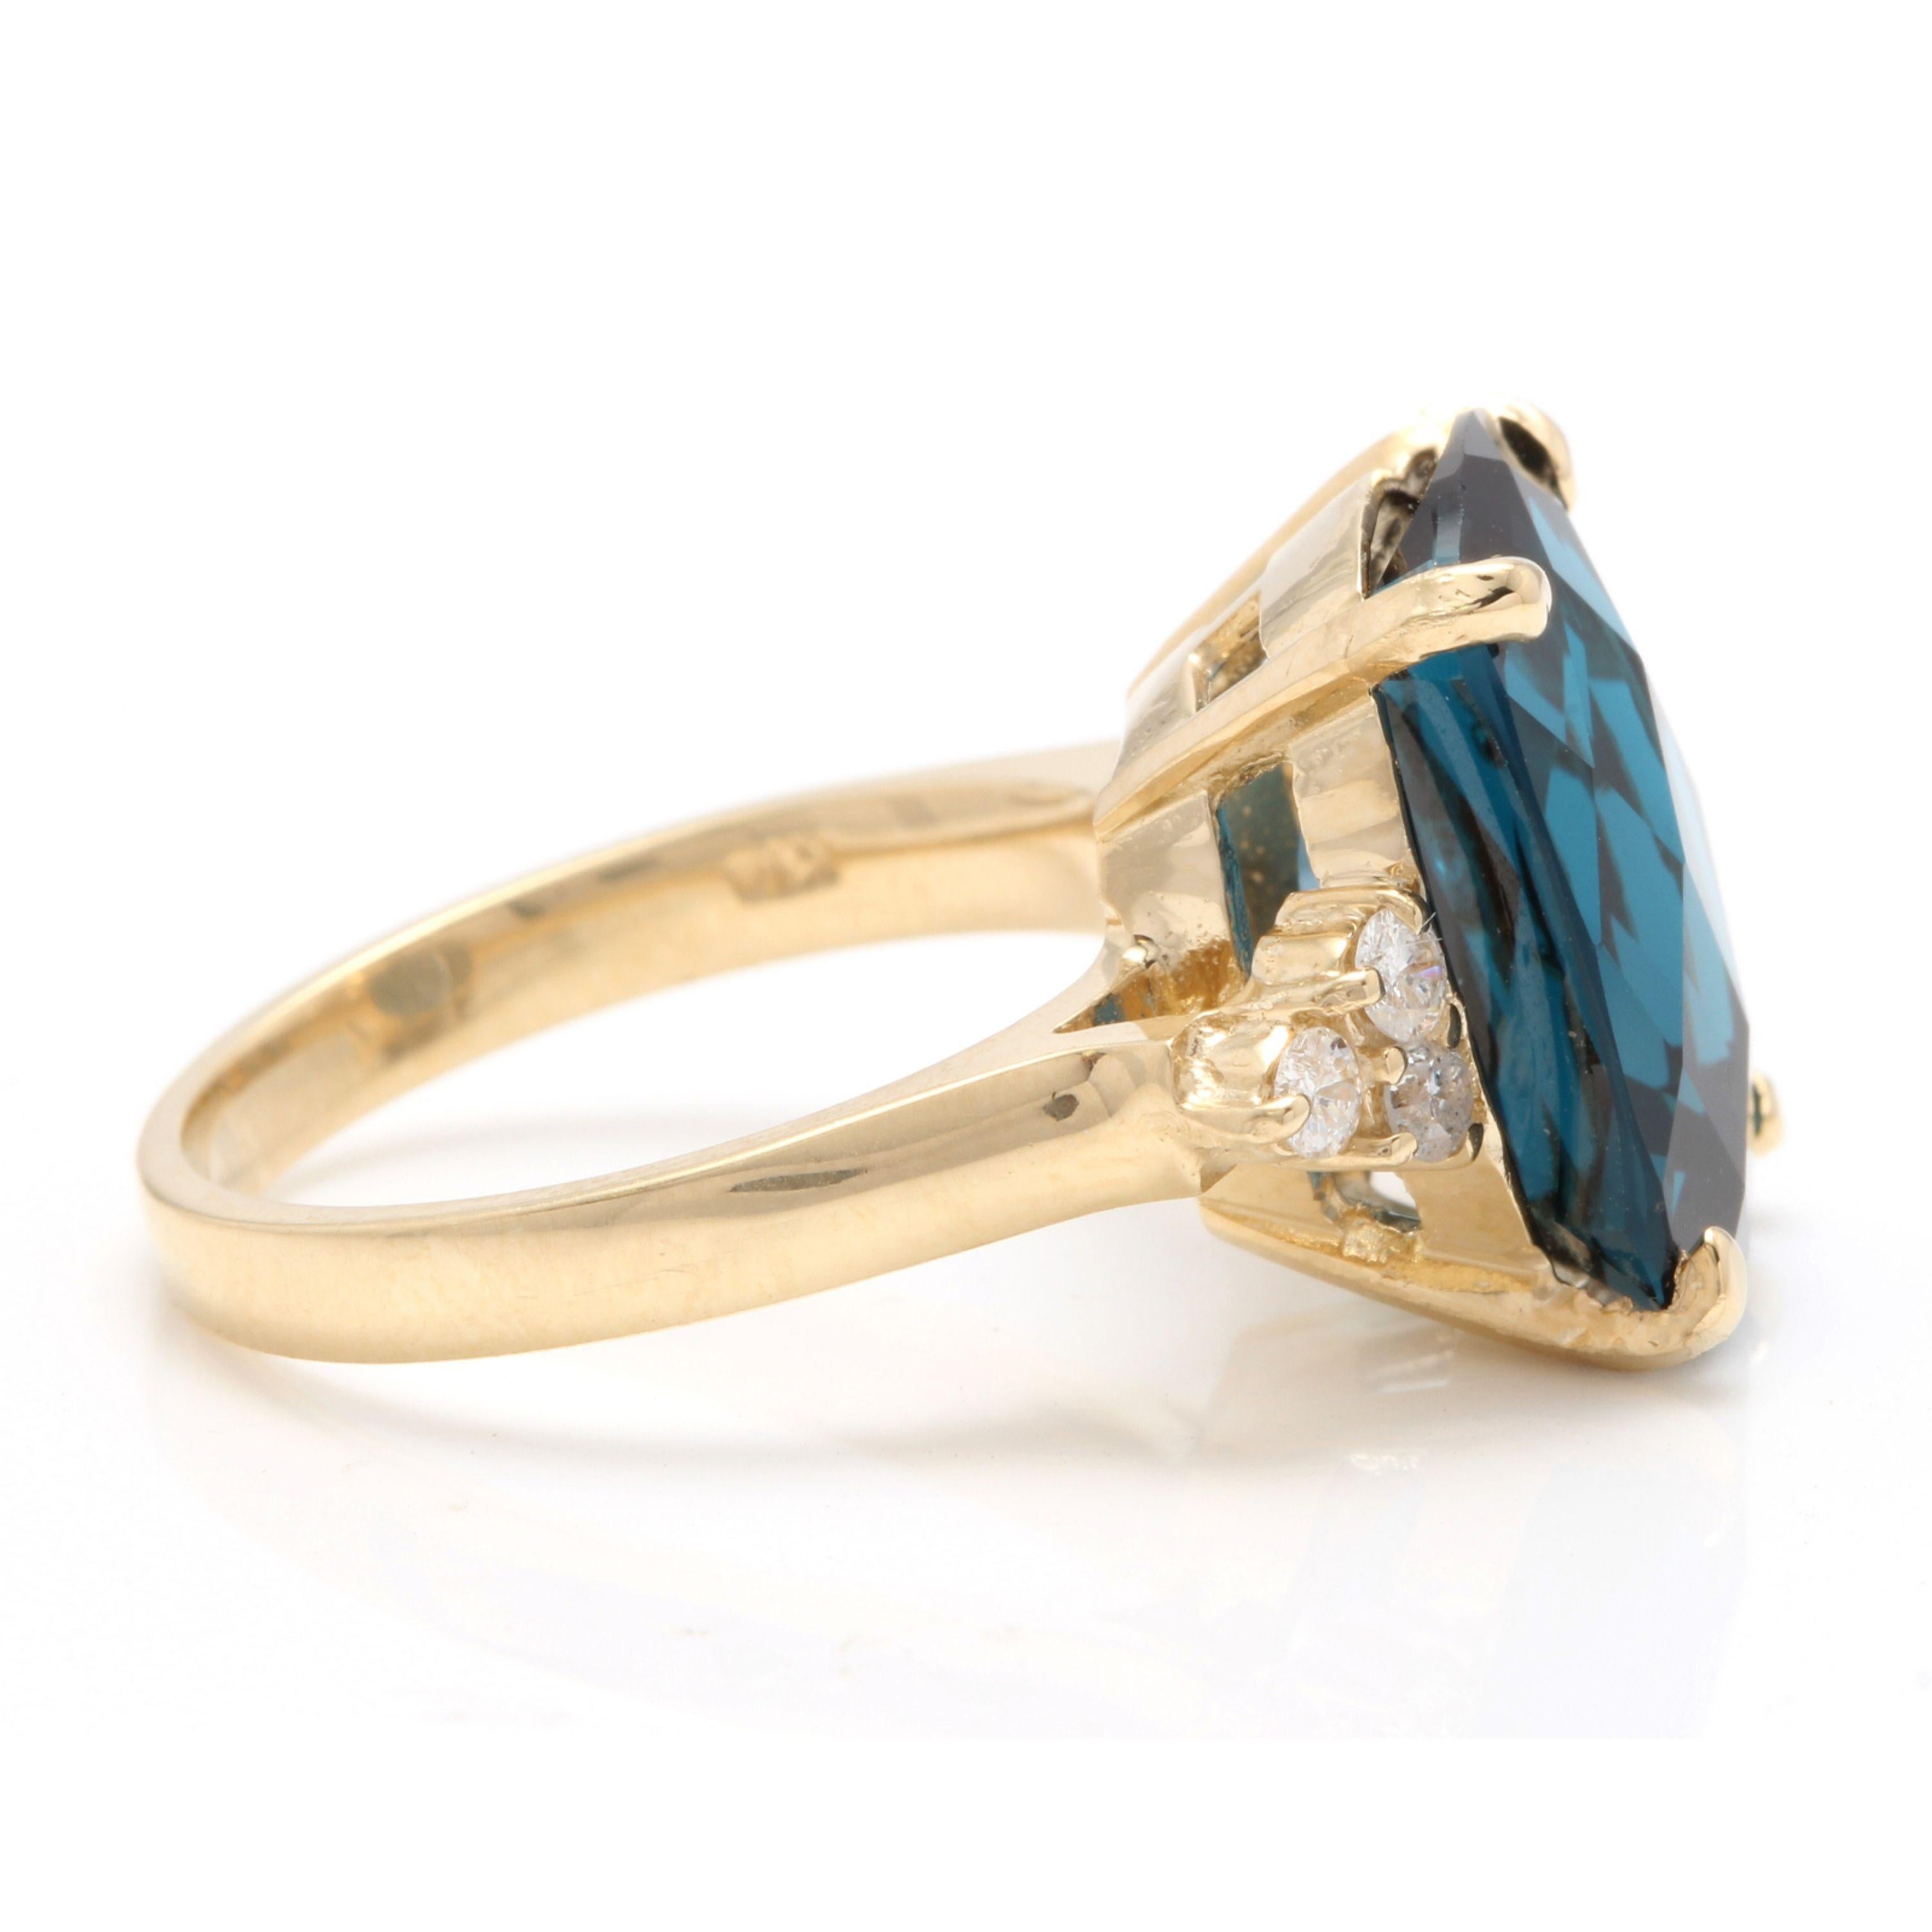 Mixed Cut 9.35 Carat Natural Impressive London Blue Topaz and Diamond 14 Karat Gold Ring For Sale